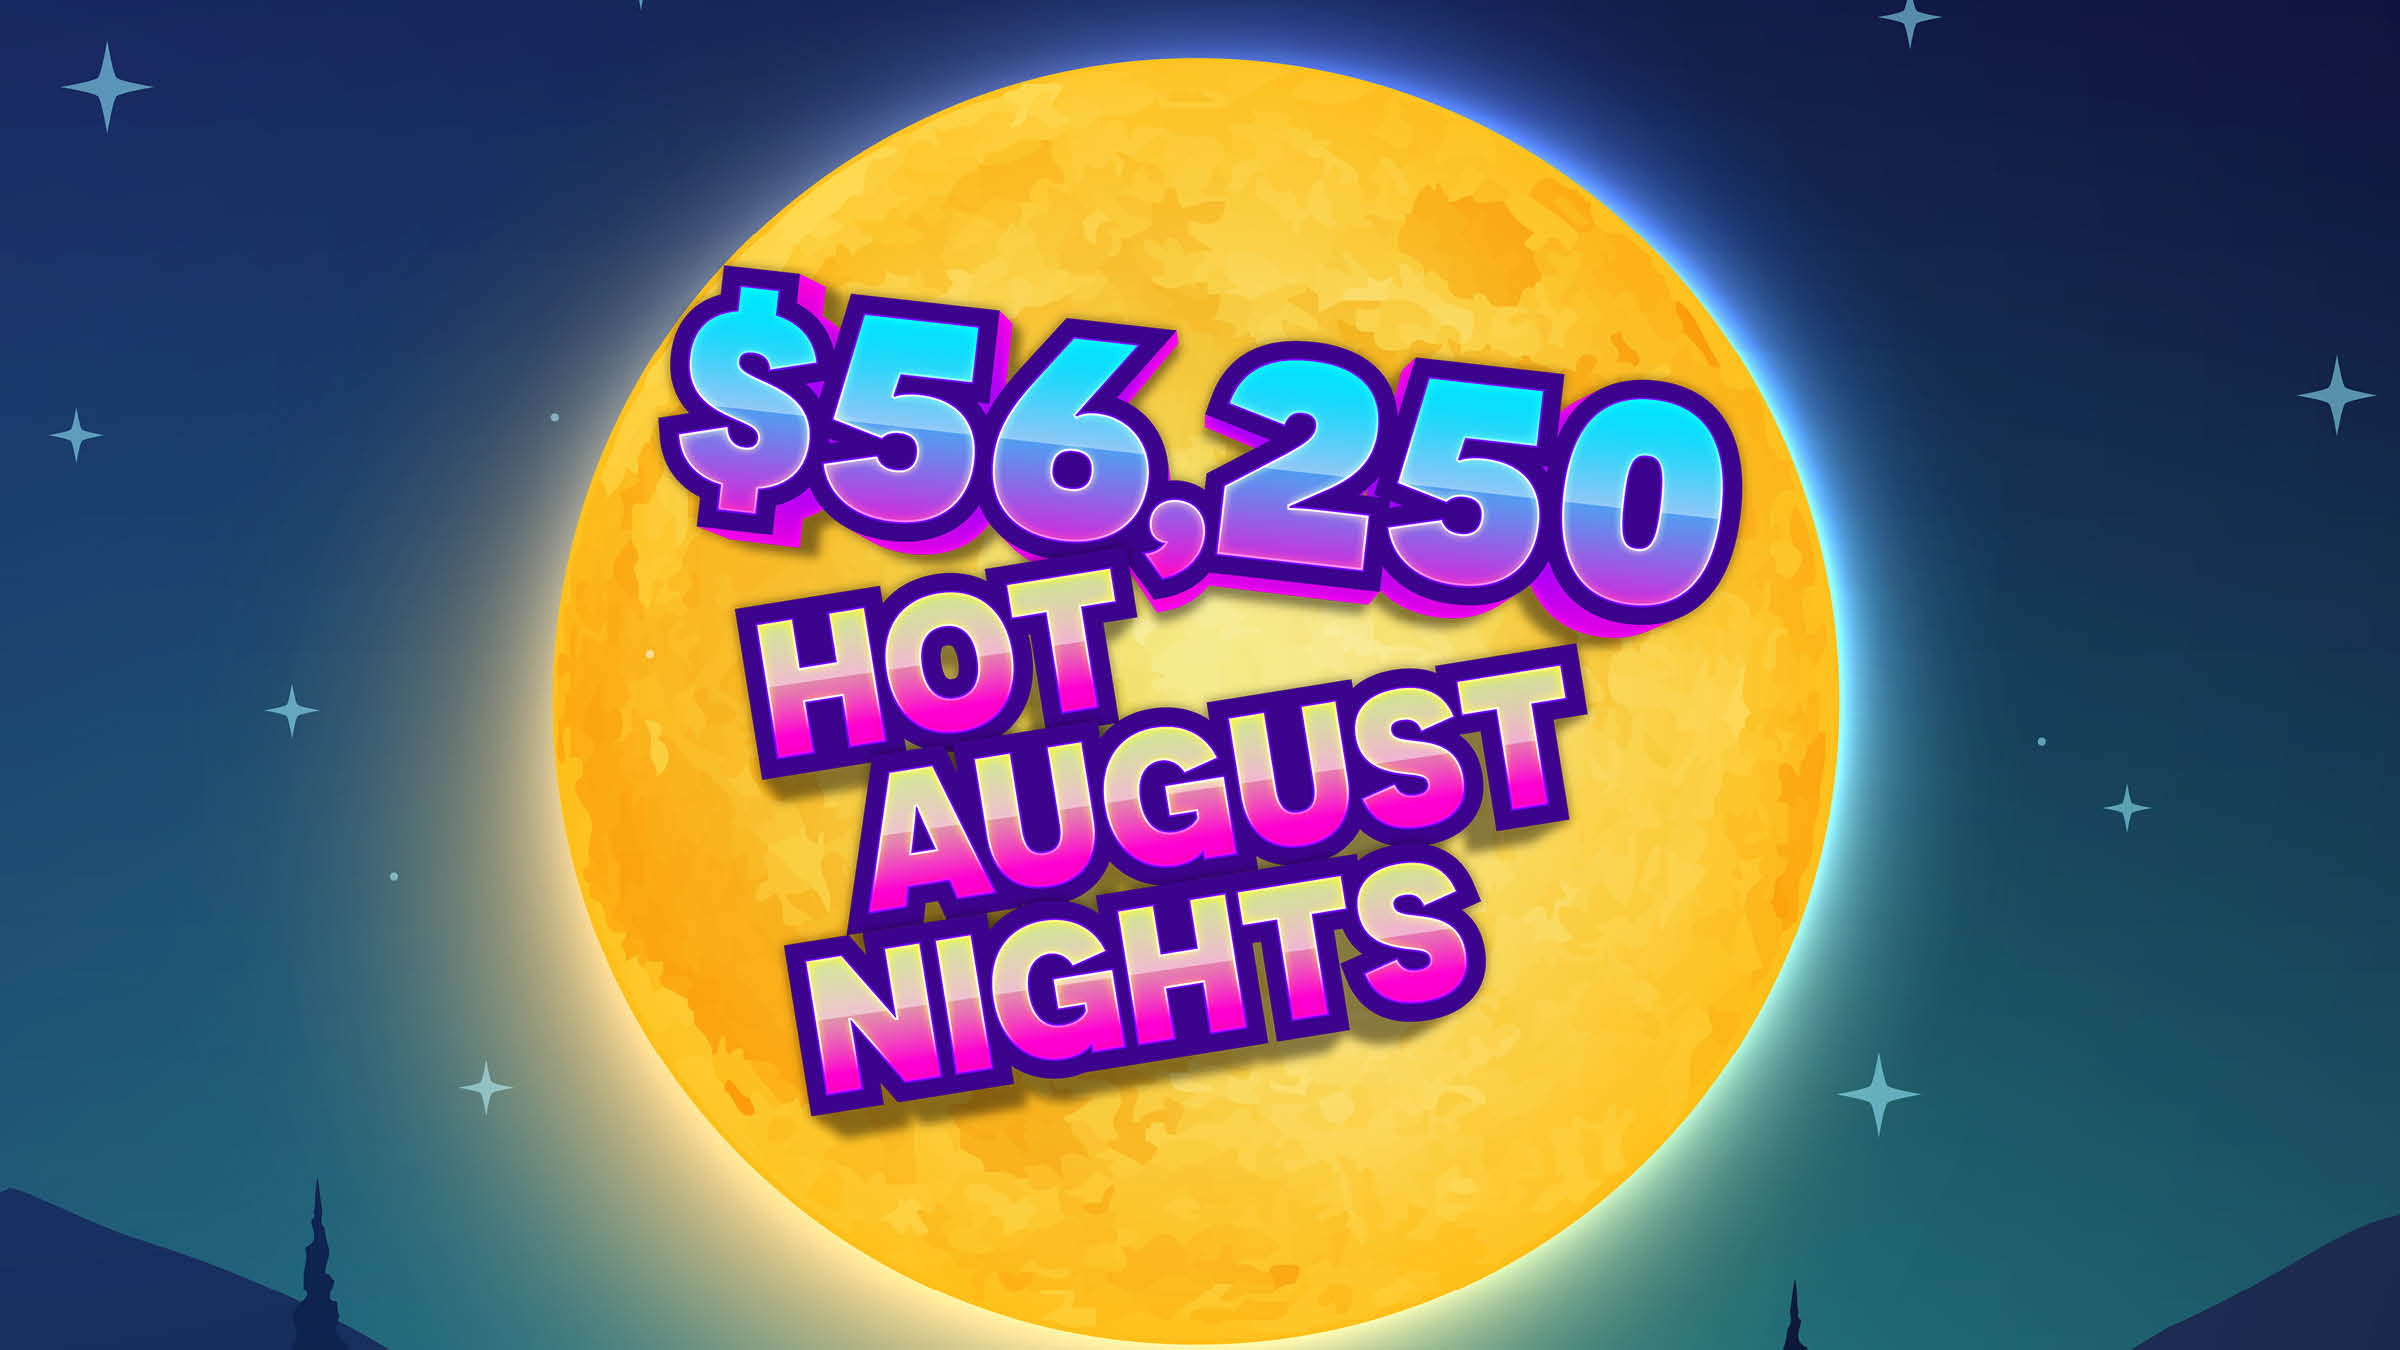 $56,250 HOT AUGUST NIGHTS